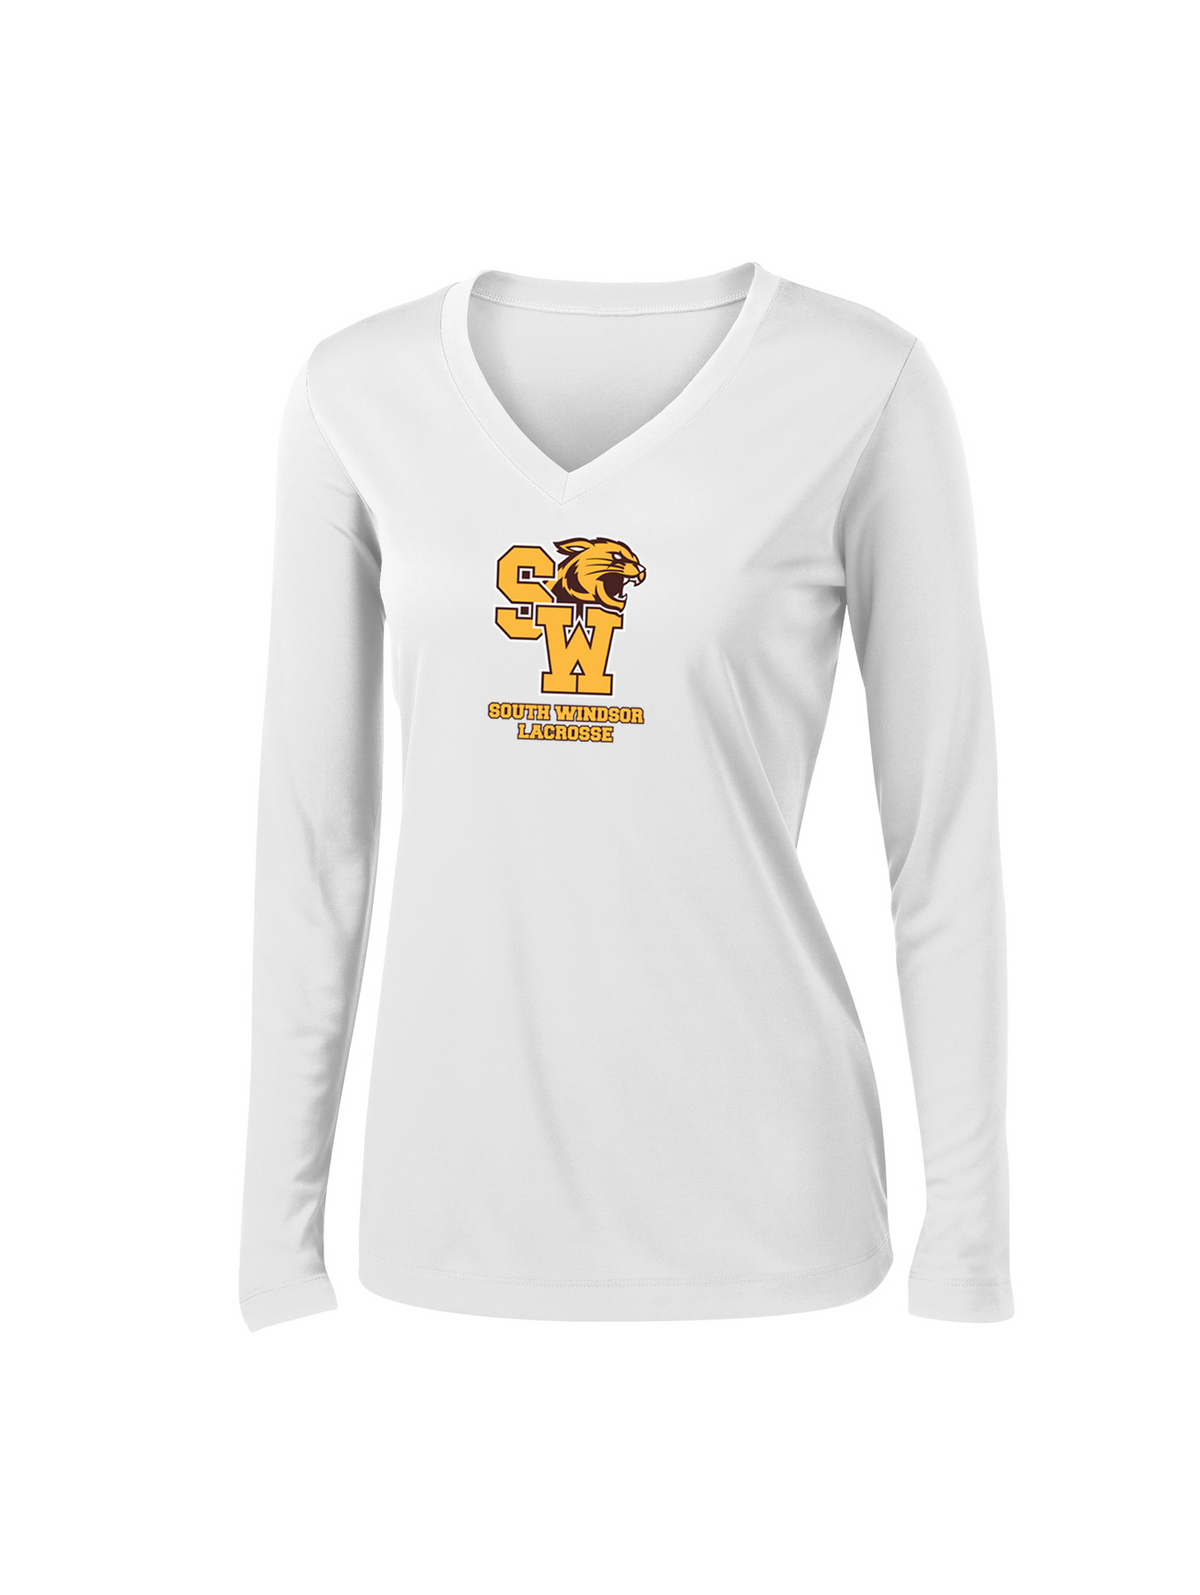 South Windsor Lacrosse Women's Long Sleeve Performance Shirt